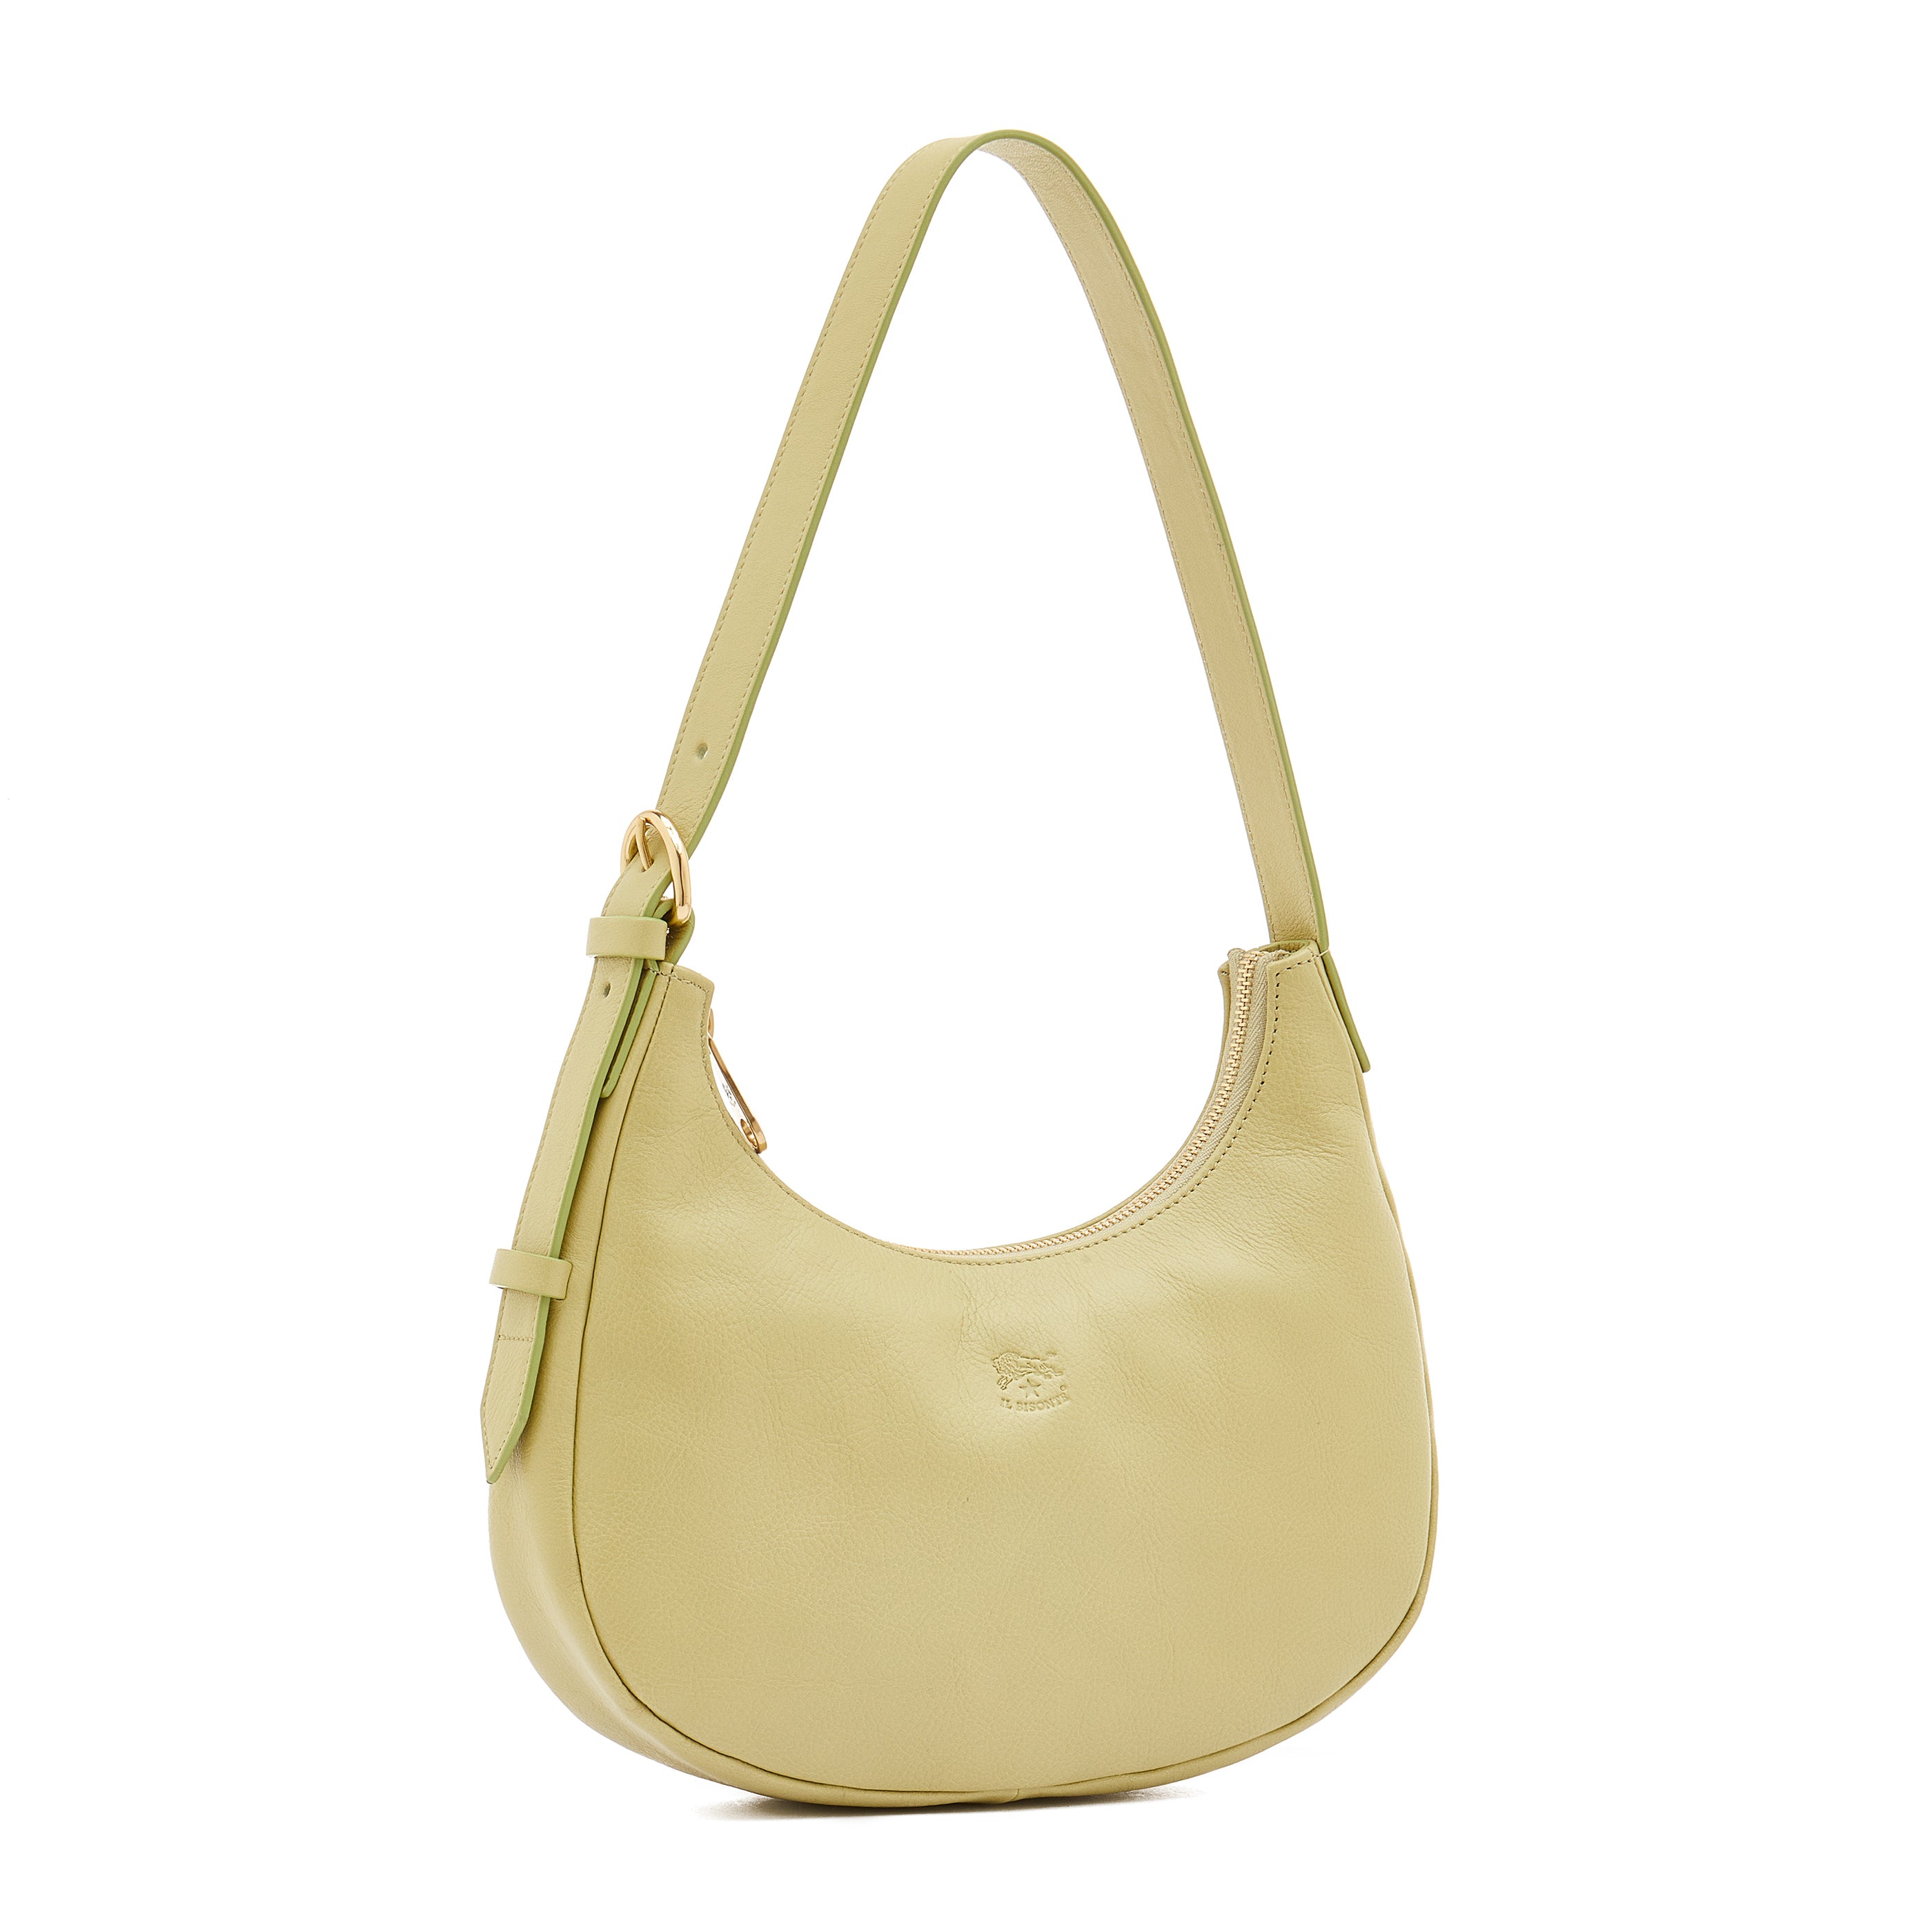 Belcanto | Women's shoulder bag in leather color pistachio